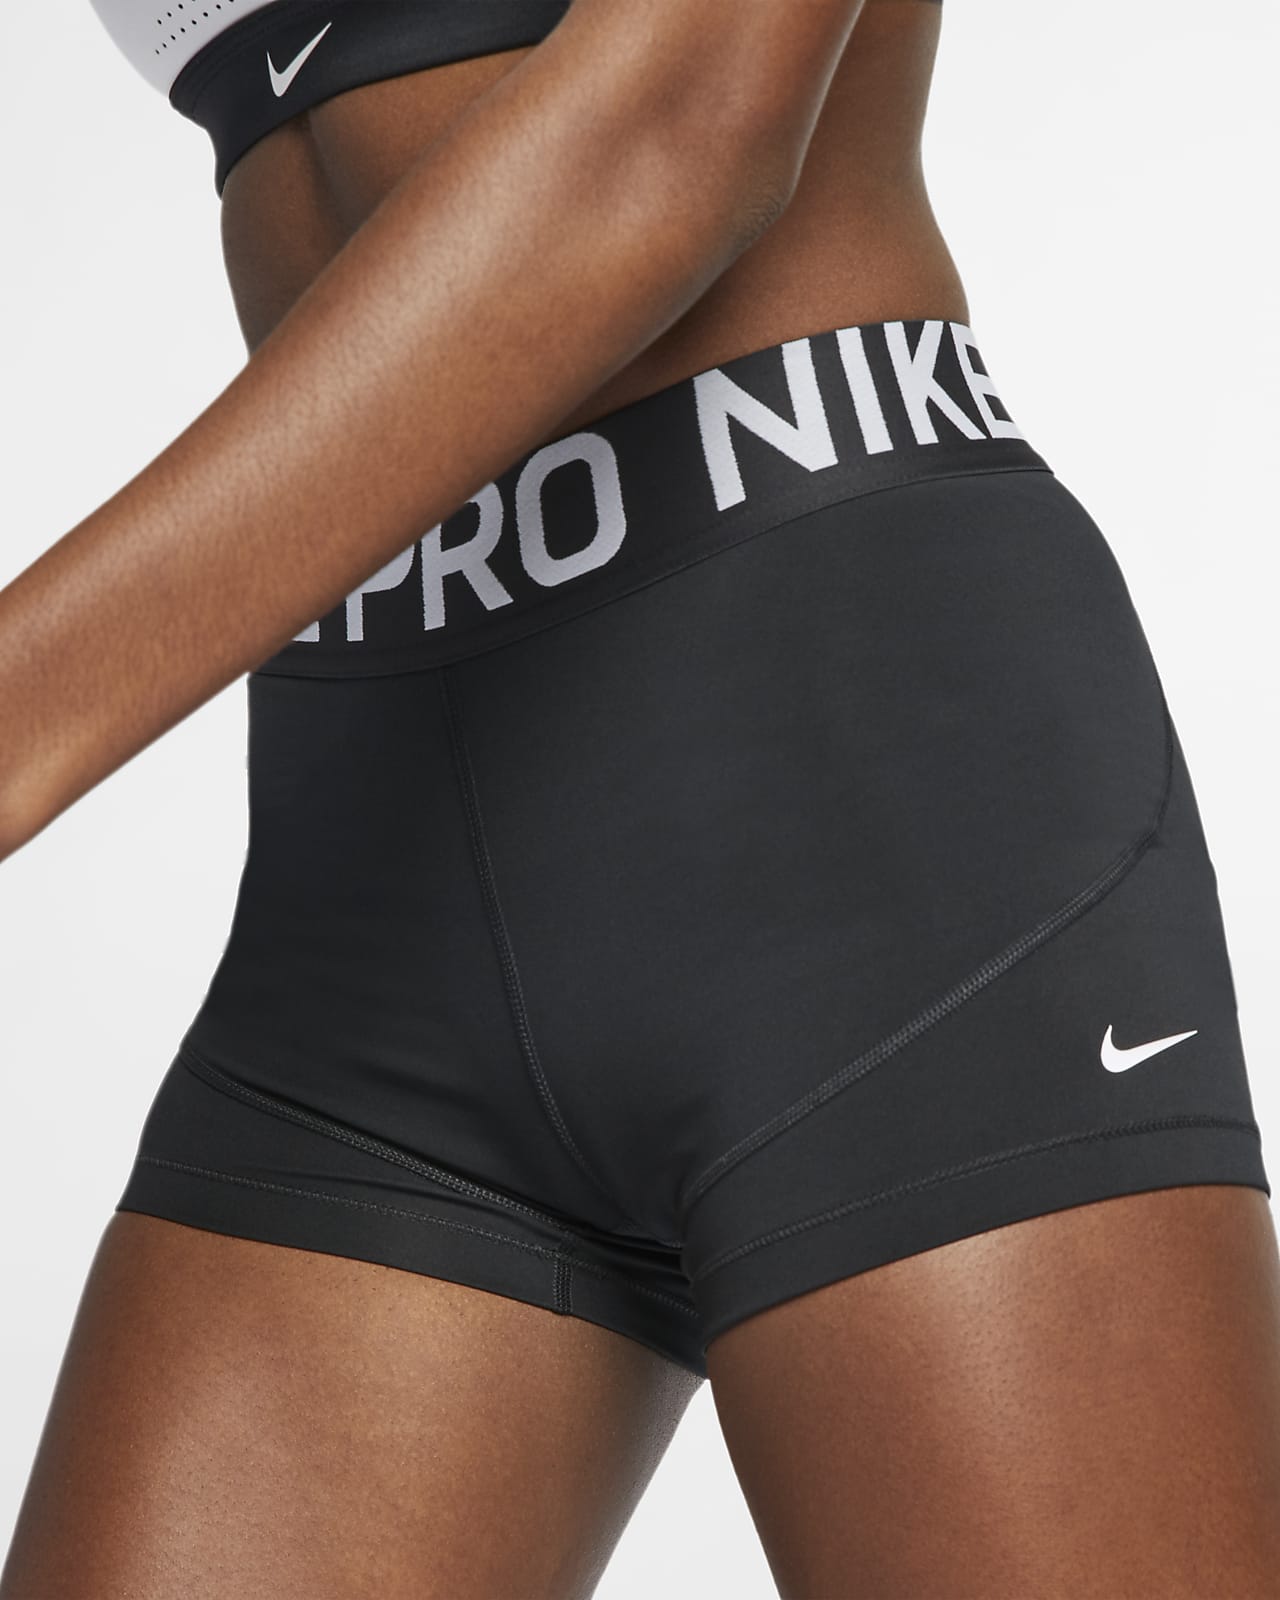 nike training icon clash pro 3 inch shorts in black